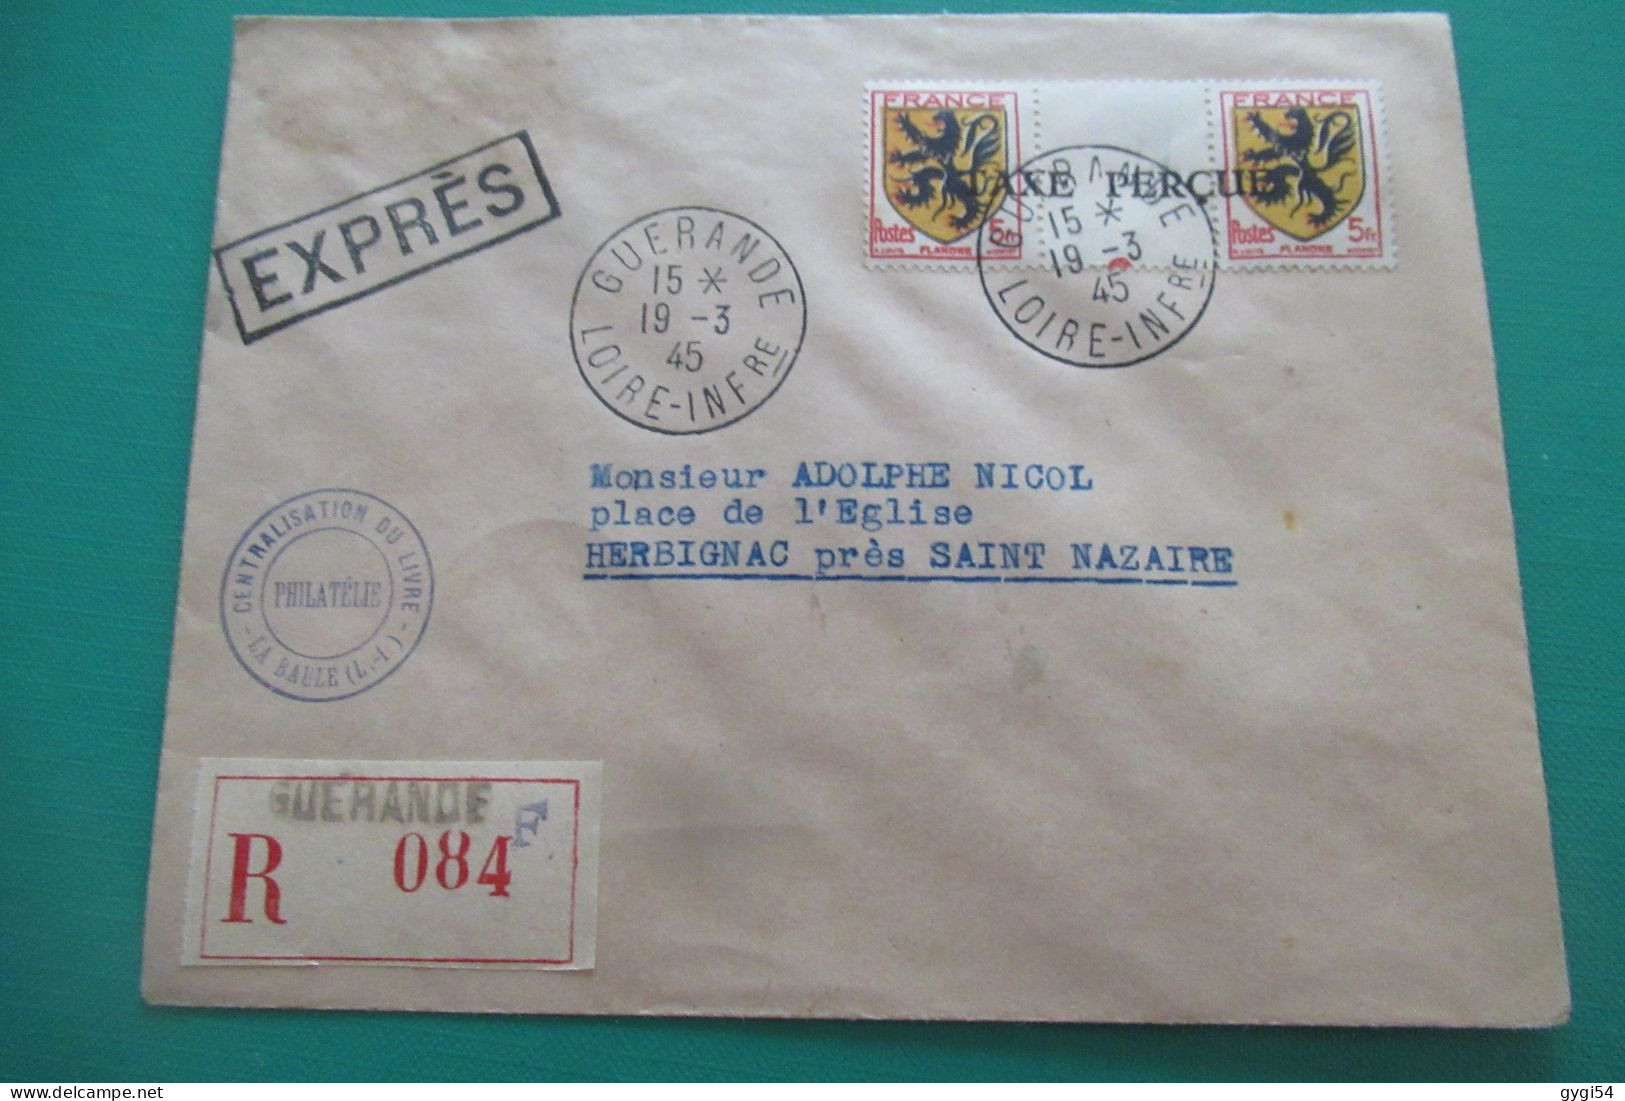 LIBERATION Lettre Recommandée En Expres  Taxe Perçue  GUERANDE 19 03 1945 - Libération